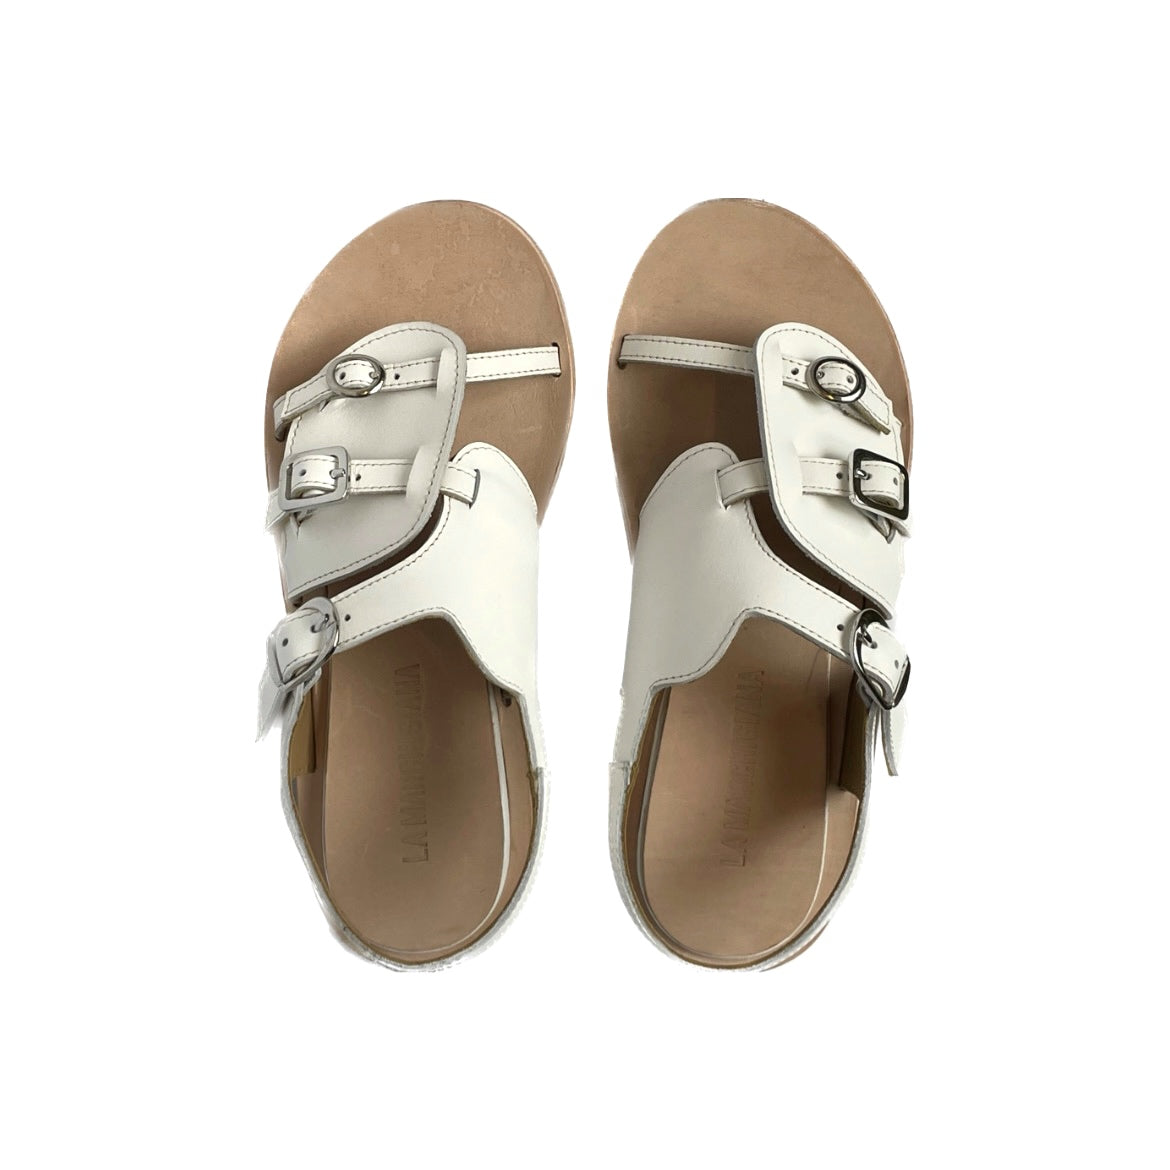 sandalo bianco mr ripley con fibbie regolabili calzata standard